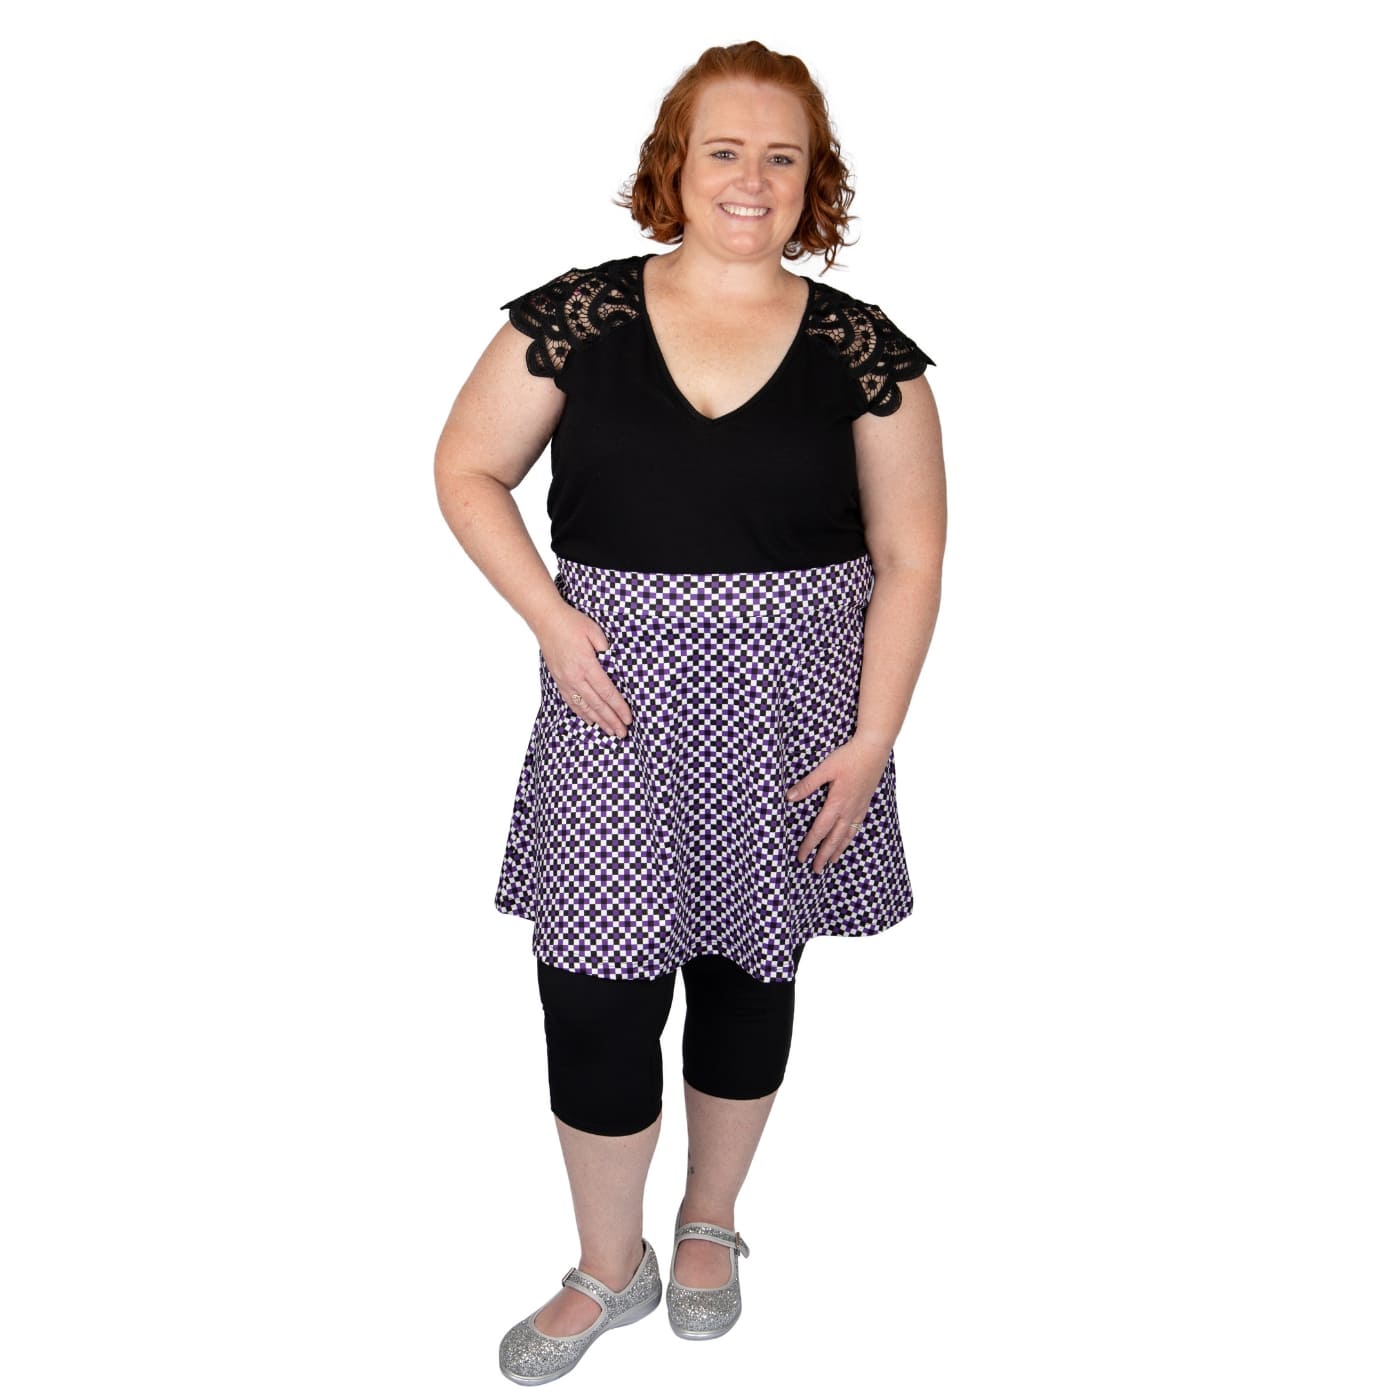 Purple Check Short Skirt by RainbowsAndFairies.com.au (Check Print - Purple - Black - White - Kitsch - Aline Skirt With Pockets - Vintage Inspired) - SKU: CL_SHORT_CHECK_PUR - Pic-03